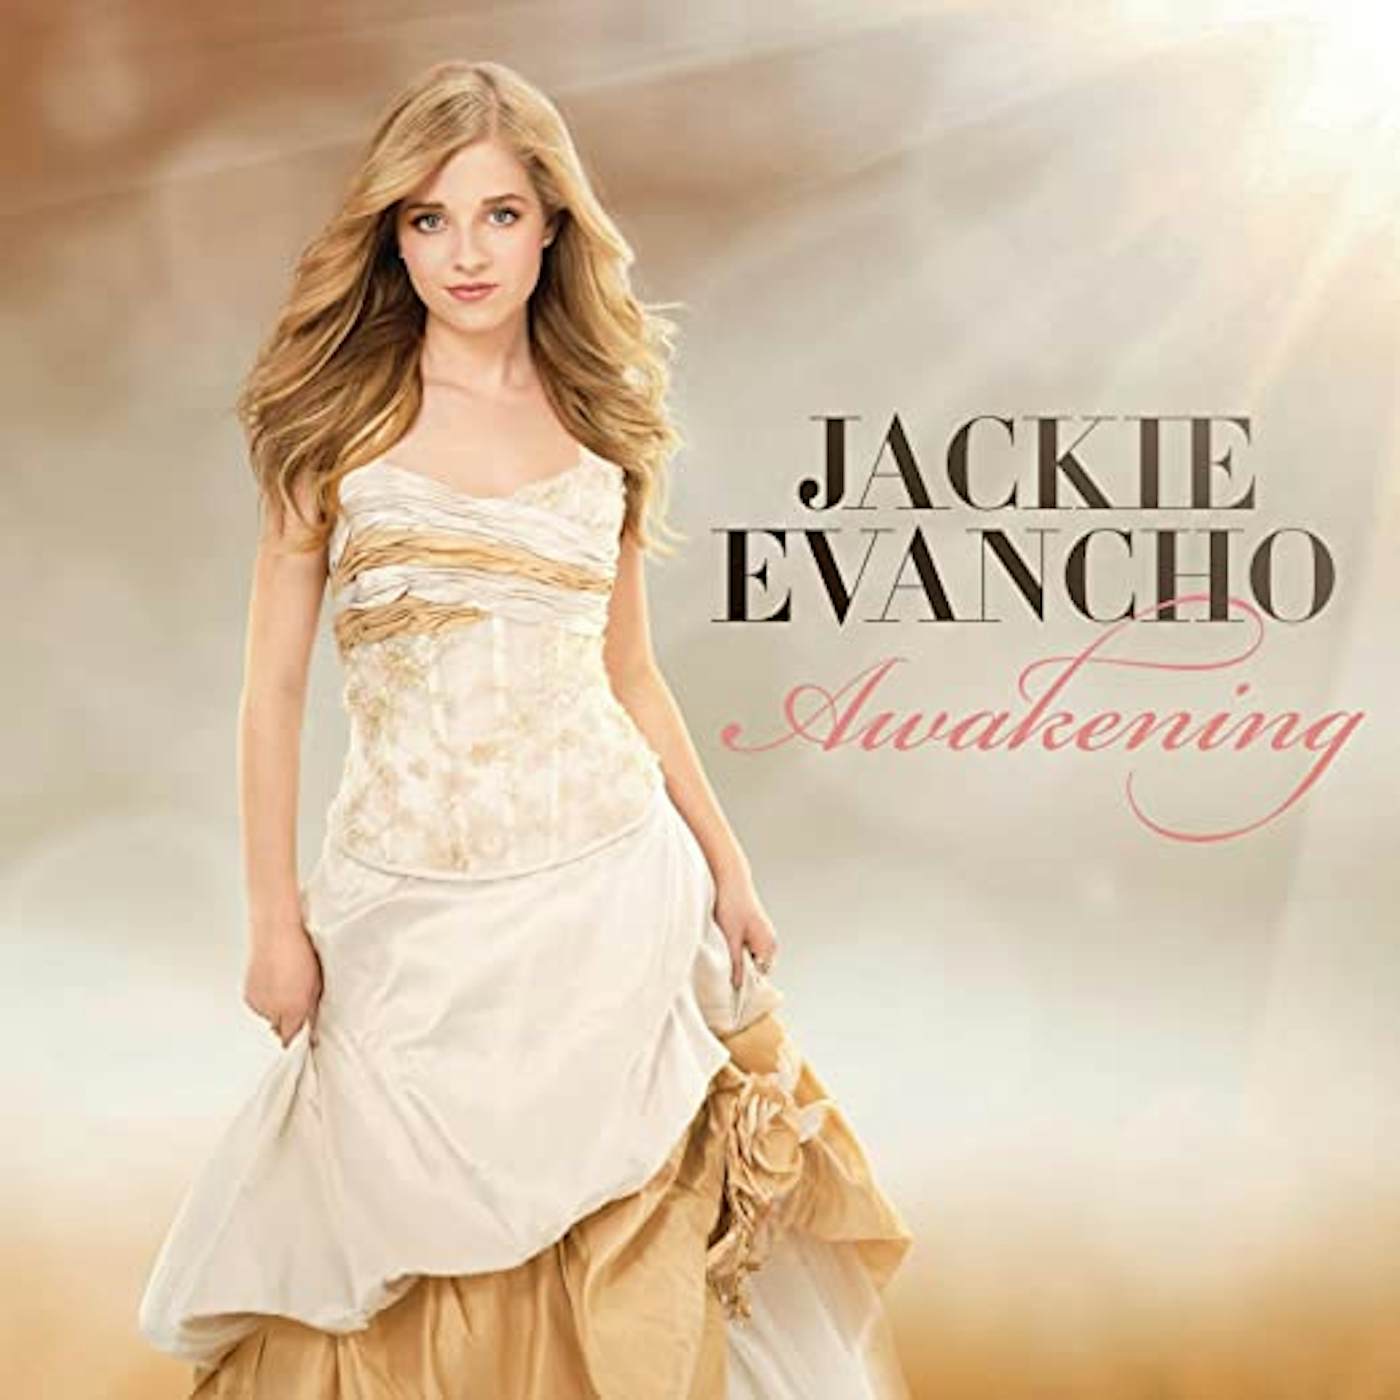 Jackie Evancho Awakening Vinyl Record